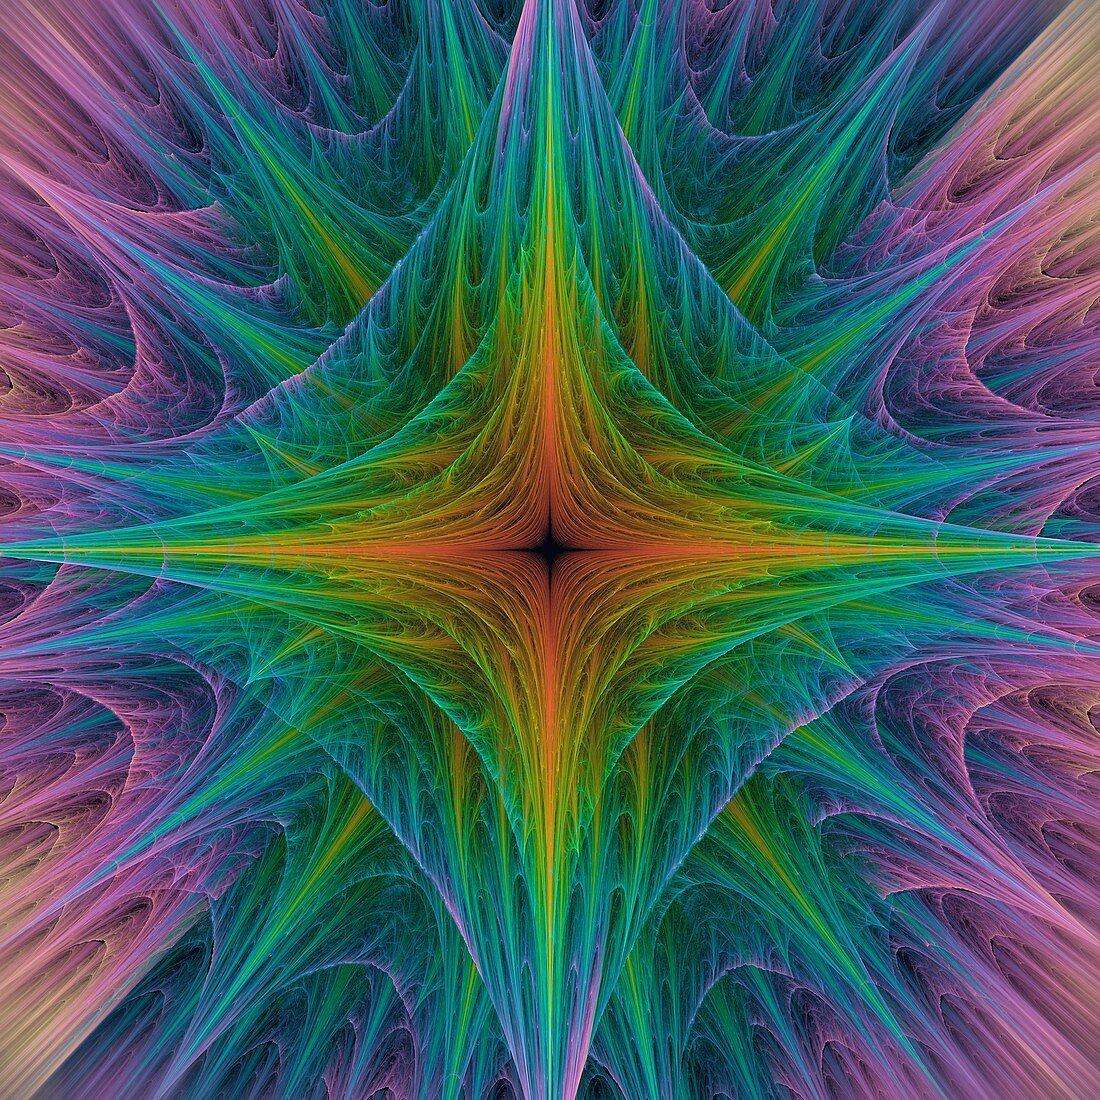 Spiky abstract illustration